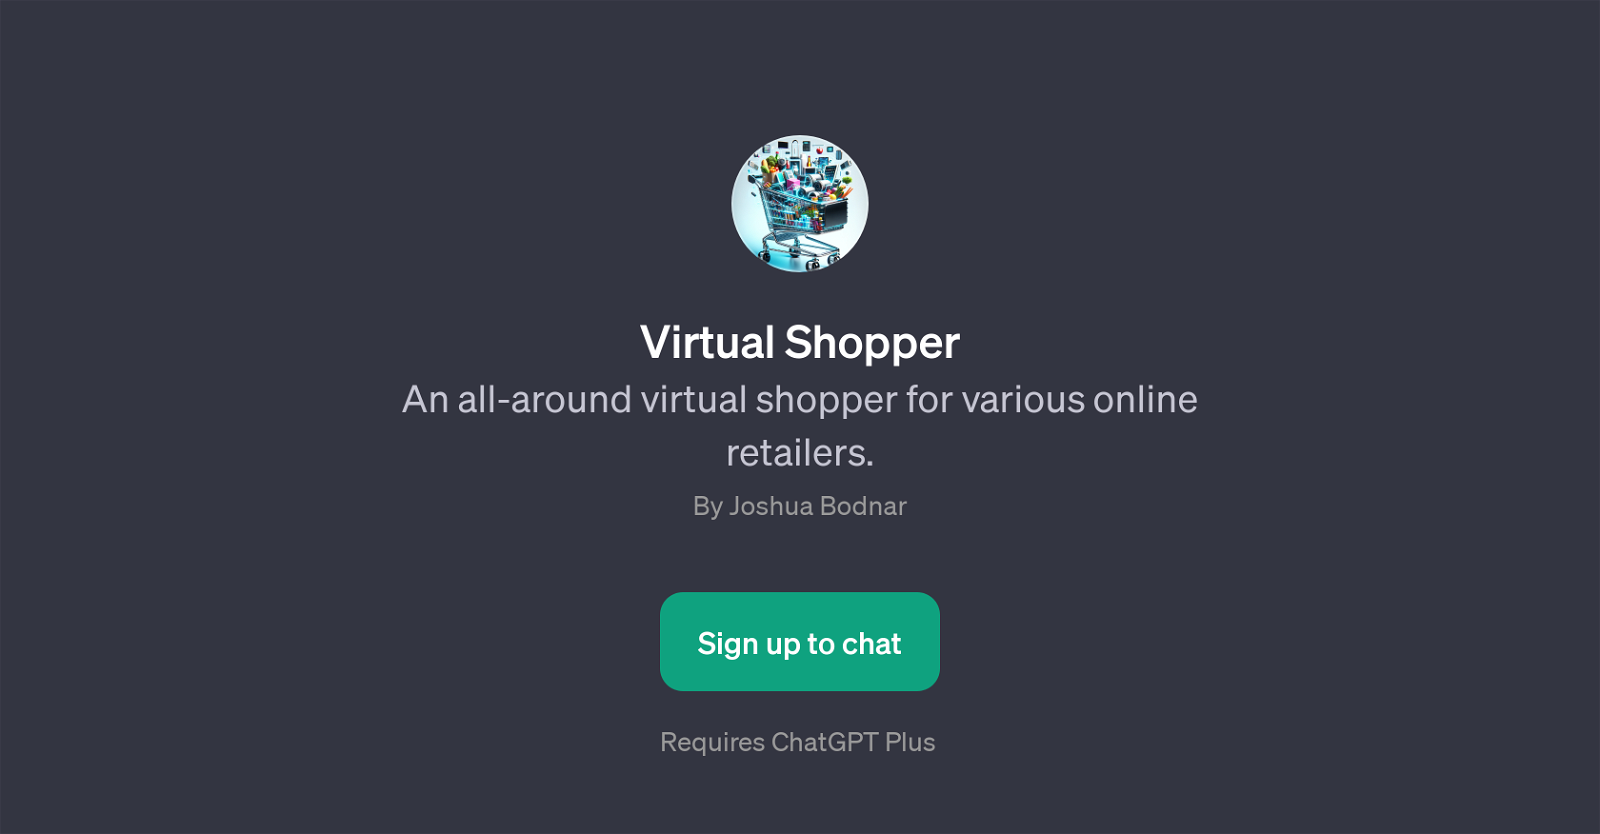 Virtual Shopper website